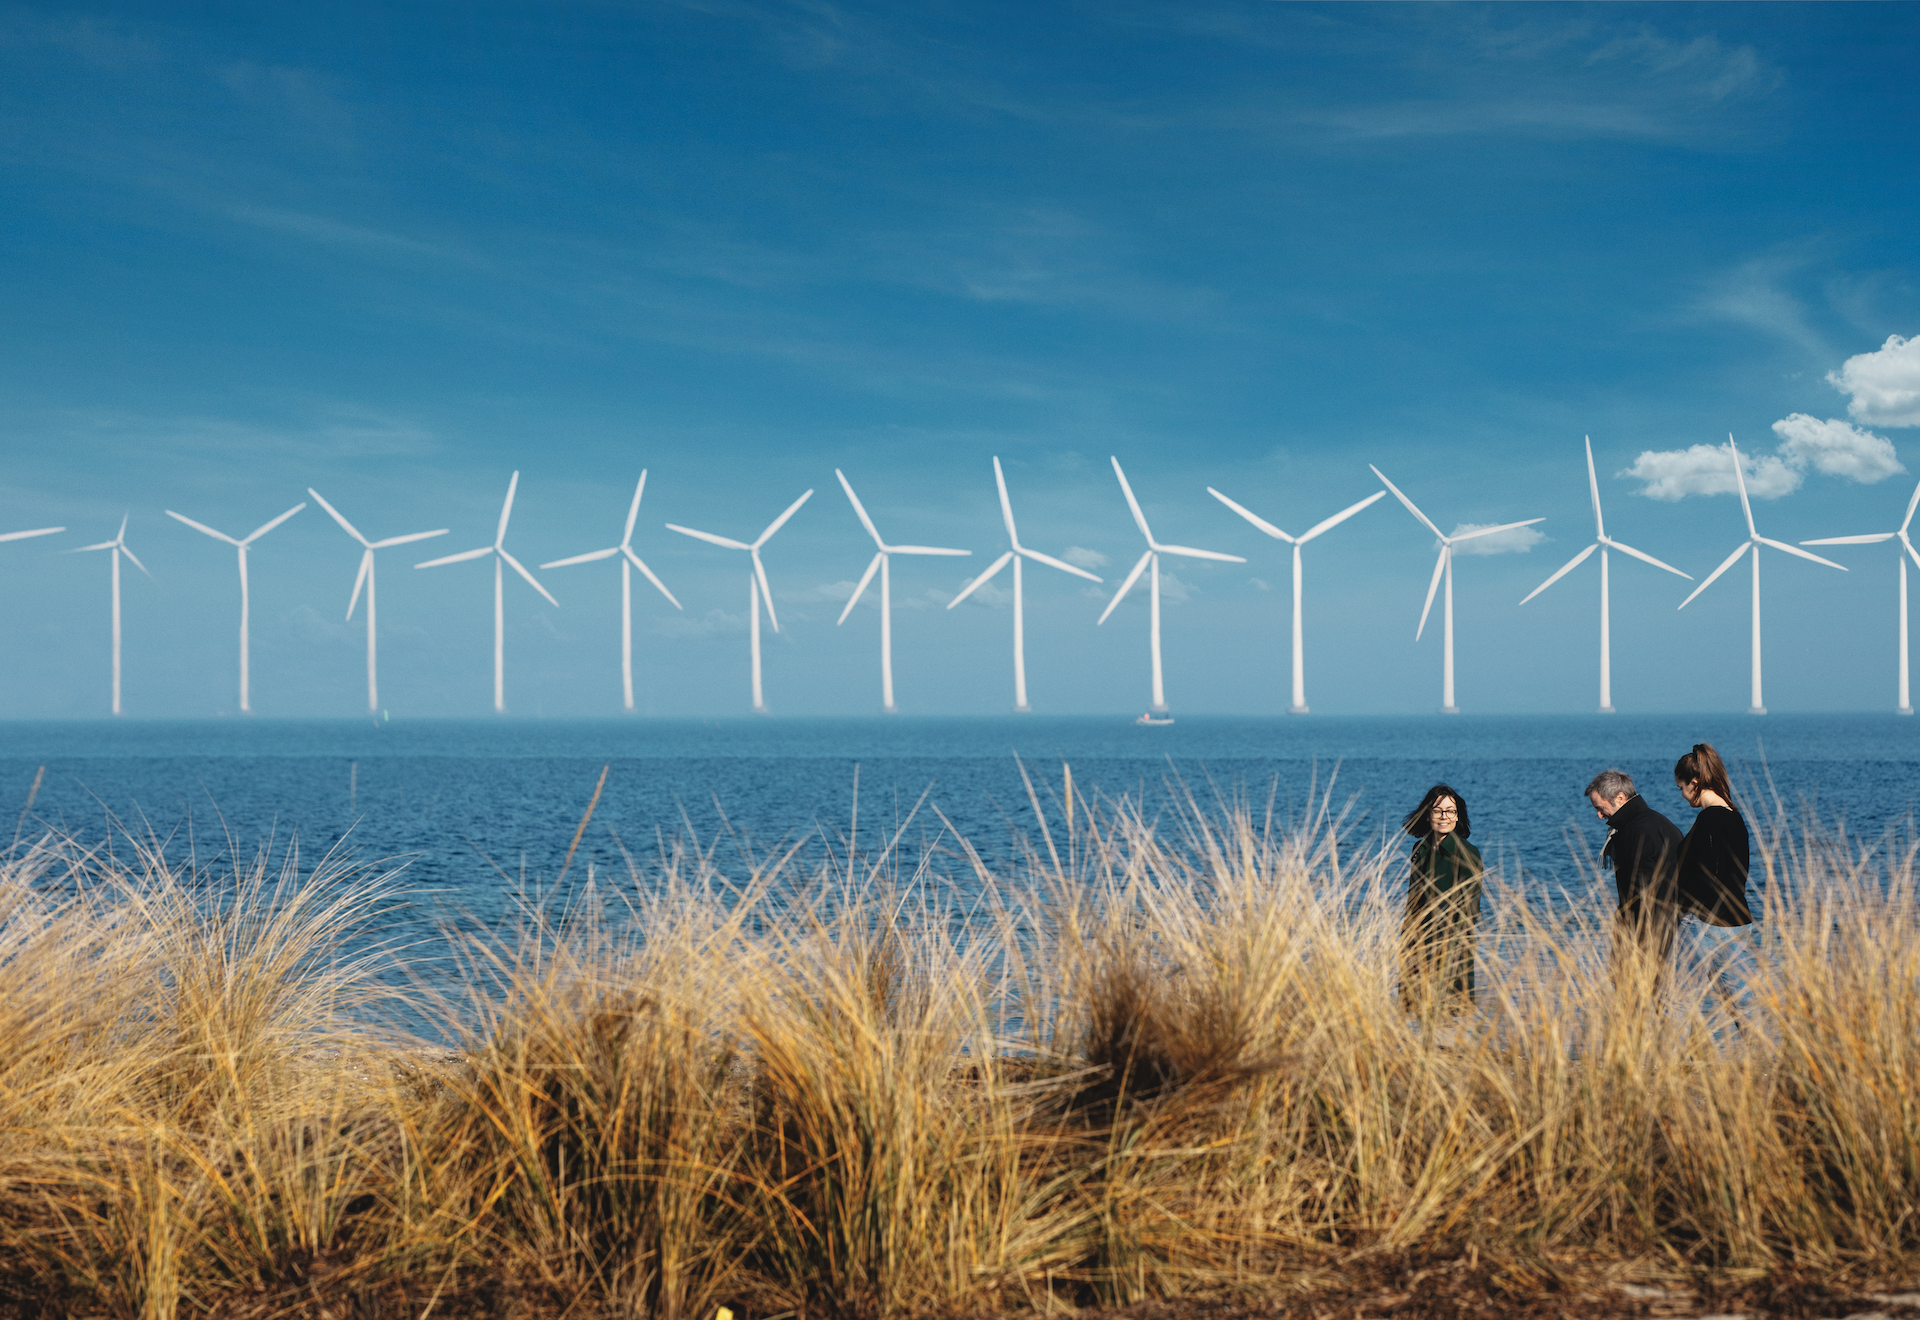 Three people walking on a beach, sea wind turbines in the background